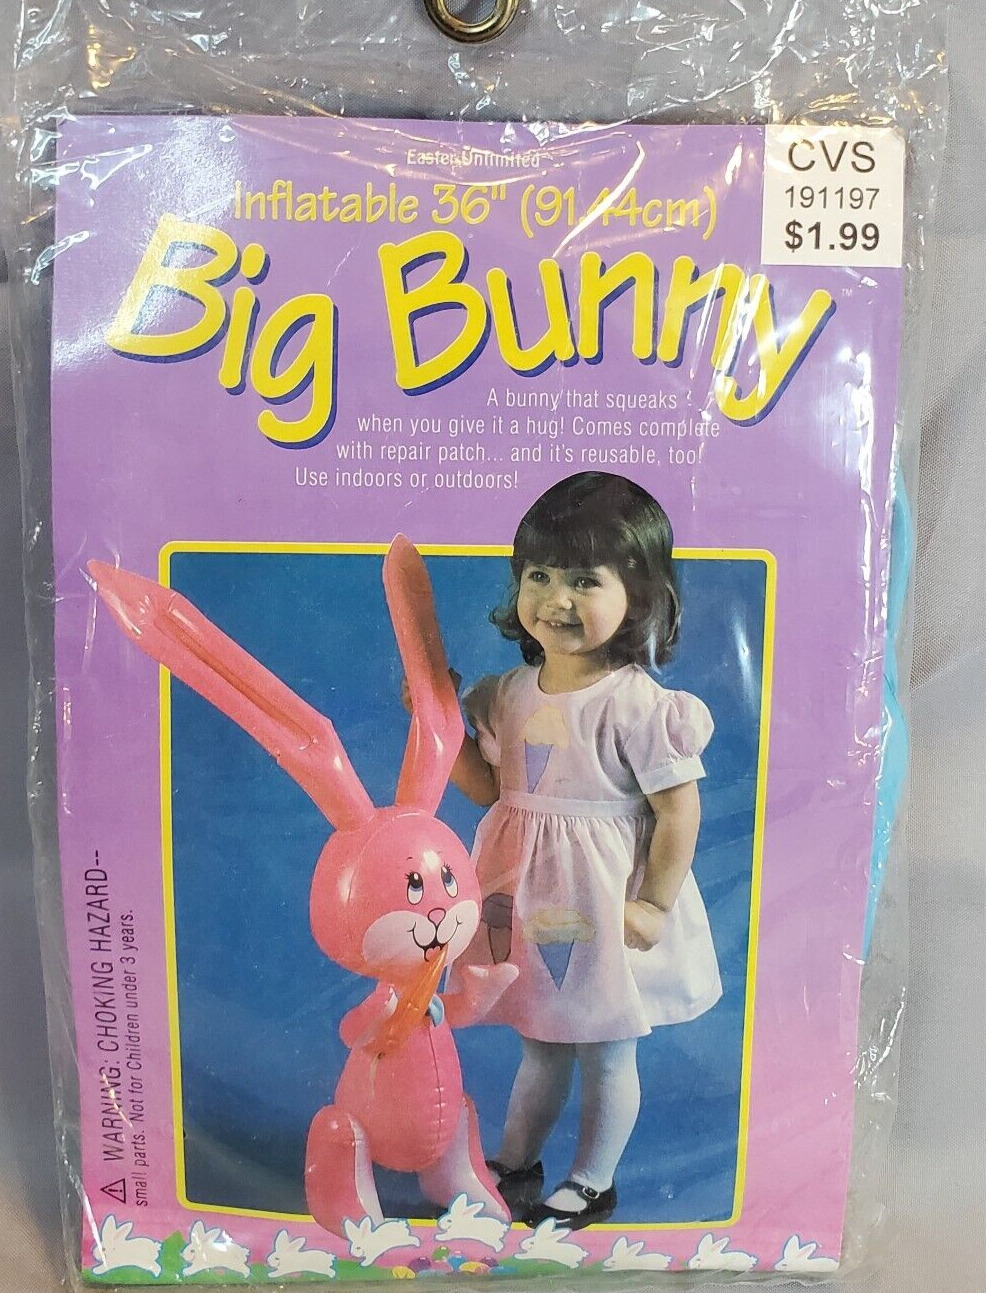 Inflatable Big Blue Easter Bunny 36” Rabbit Squeaks When You Hug Easter Vintage